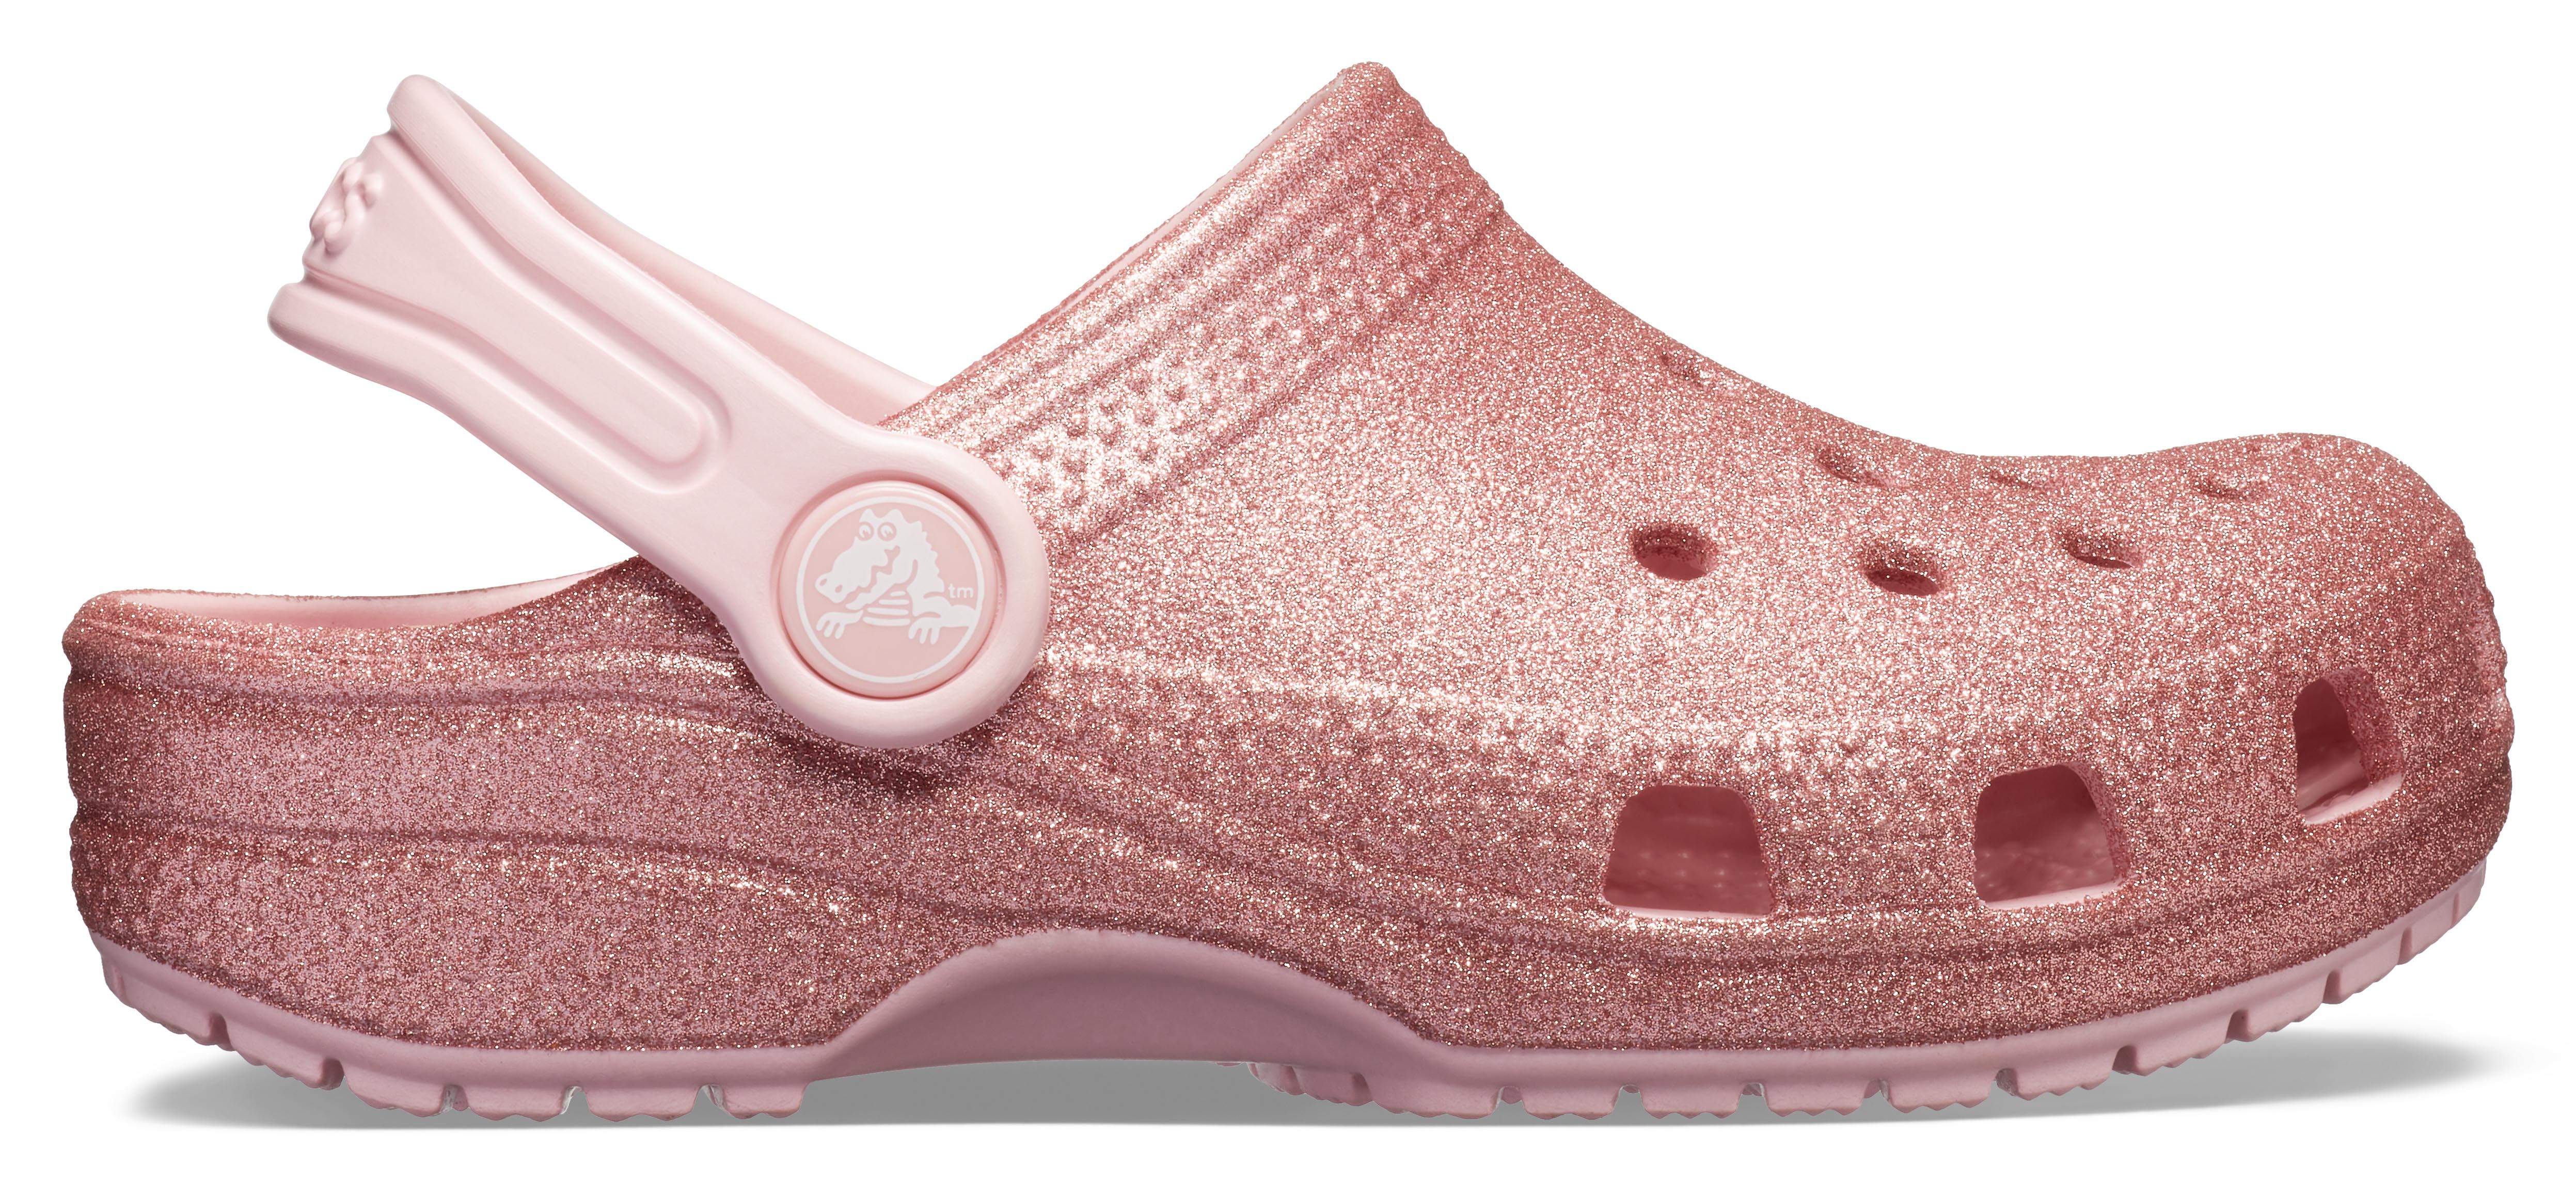 hot pink crocs with fur